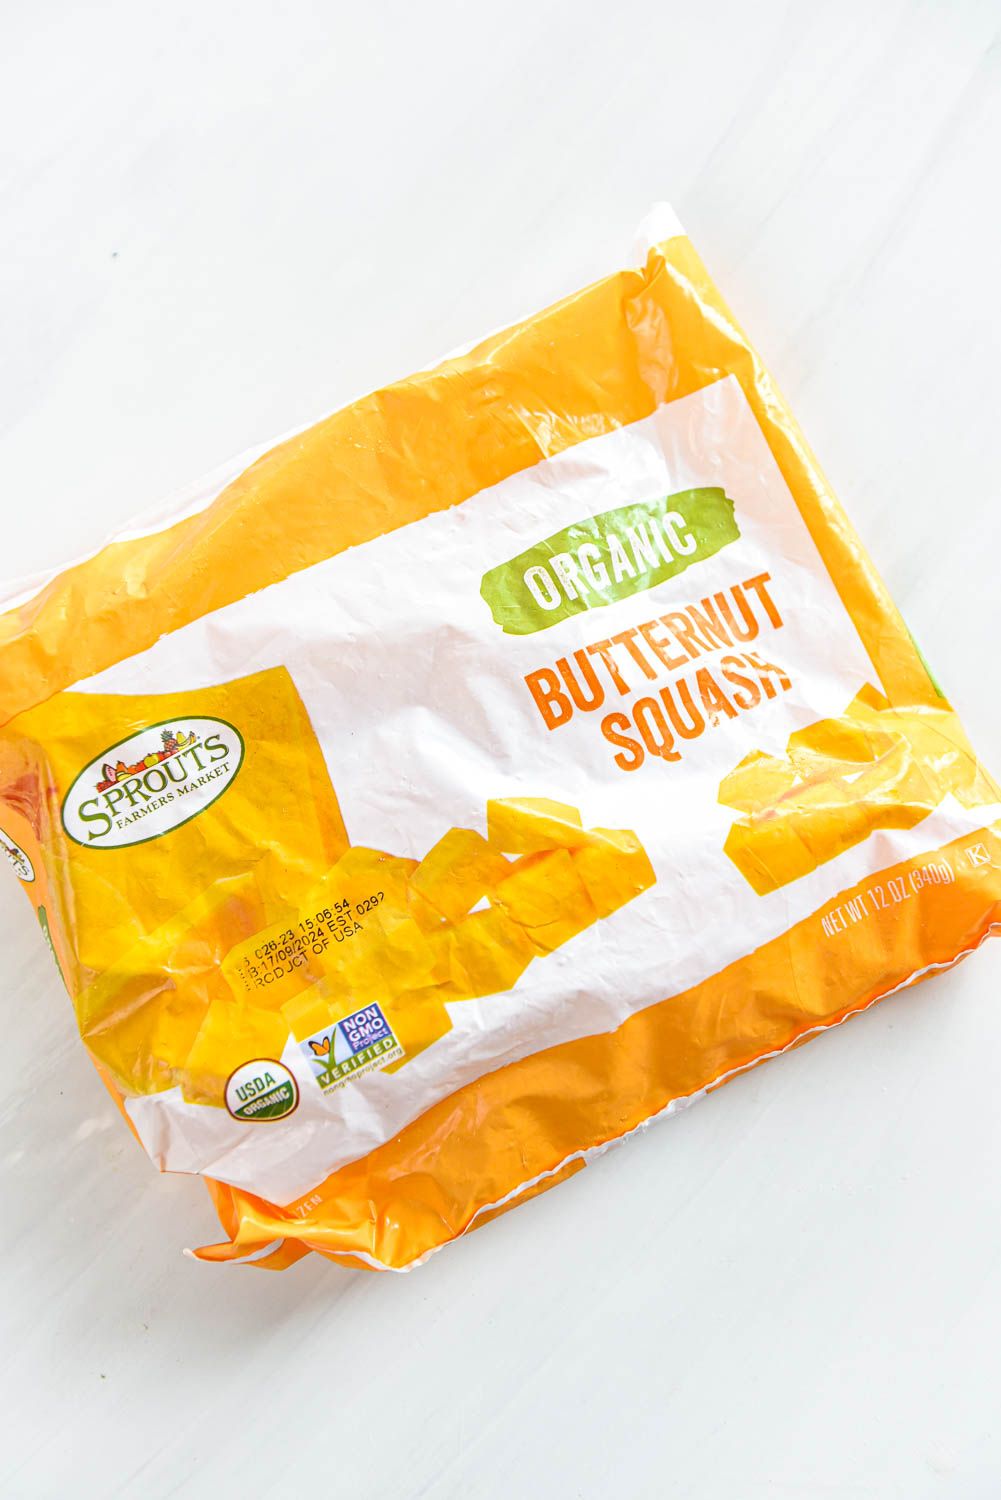 bag of frozen butternut squash